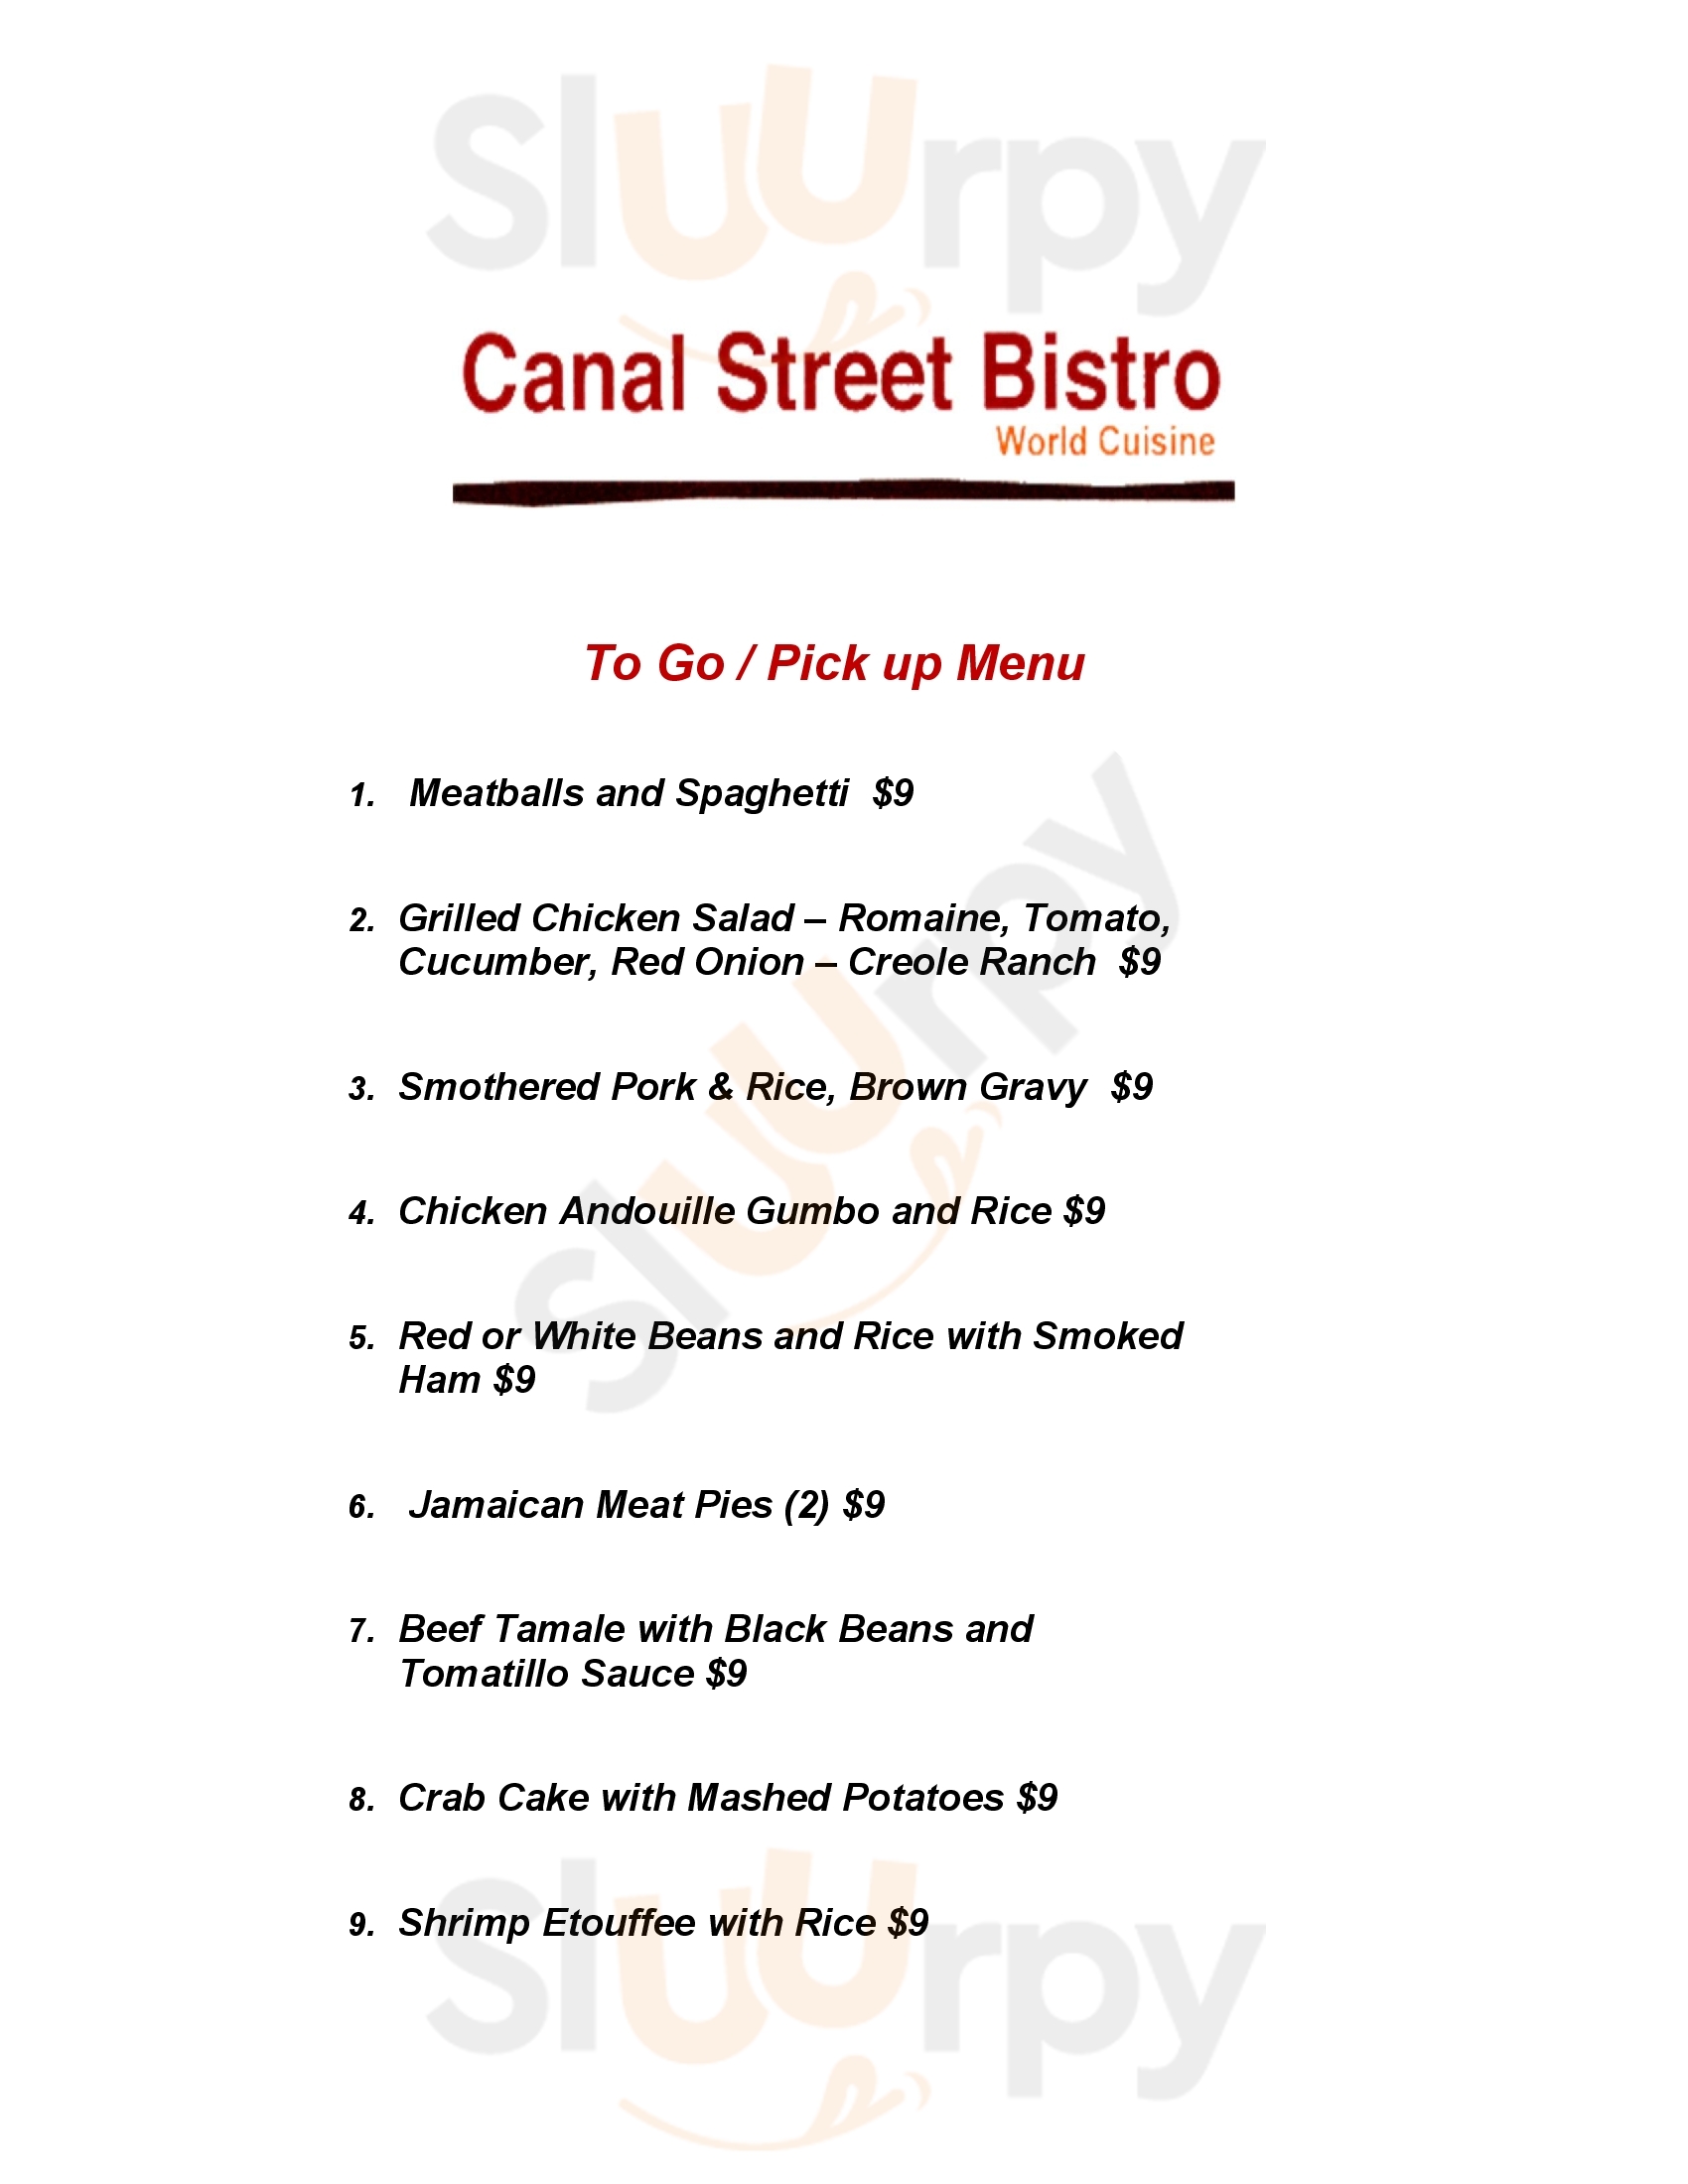 Canal Street Bistro New Orleans Menu - 1